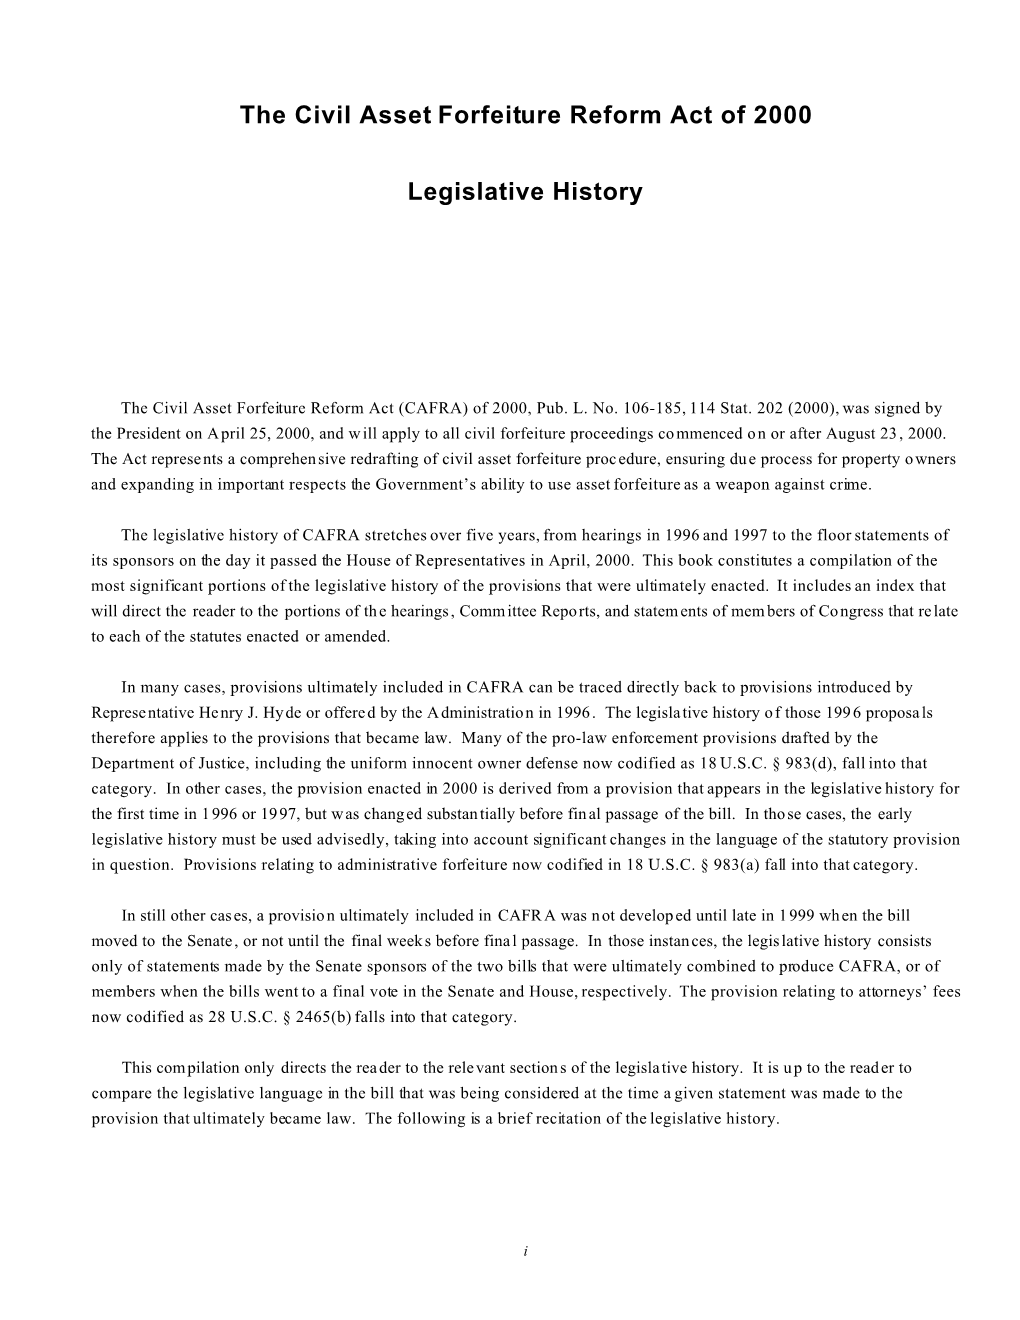 The Civil Asset Forfeiture Reform Act of 2000 Legislative History